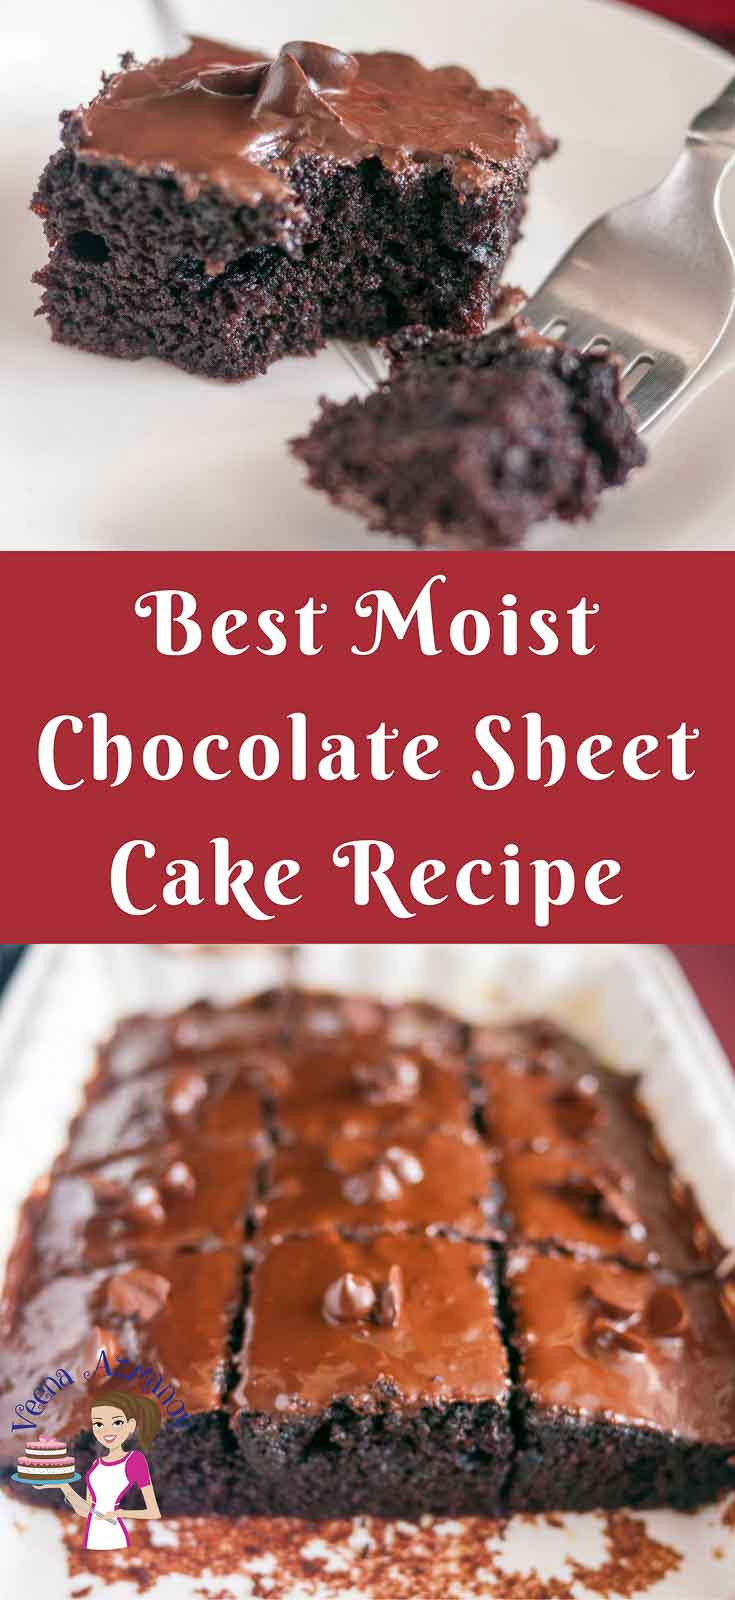 Best Moist Chocolate Cake Recipe
 Best Moist Chocolate Sheet Cake Recipe Veena Azmanov